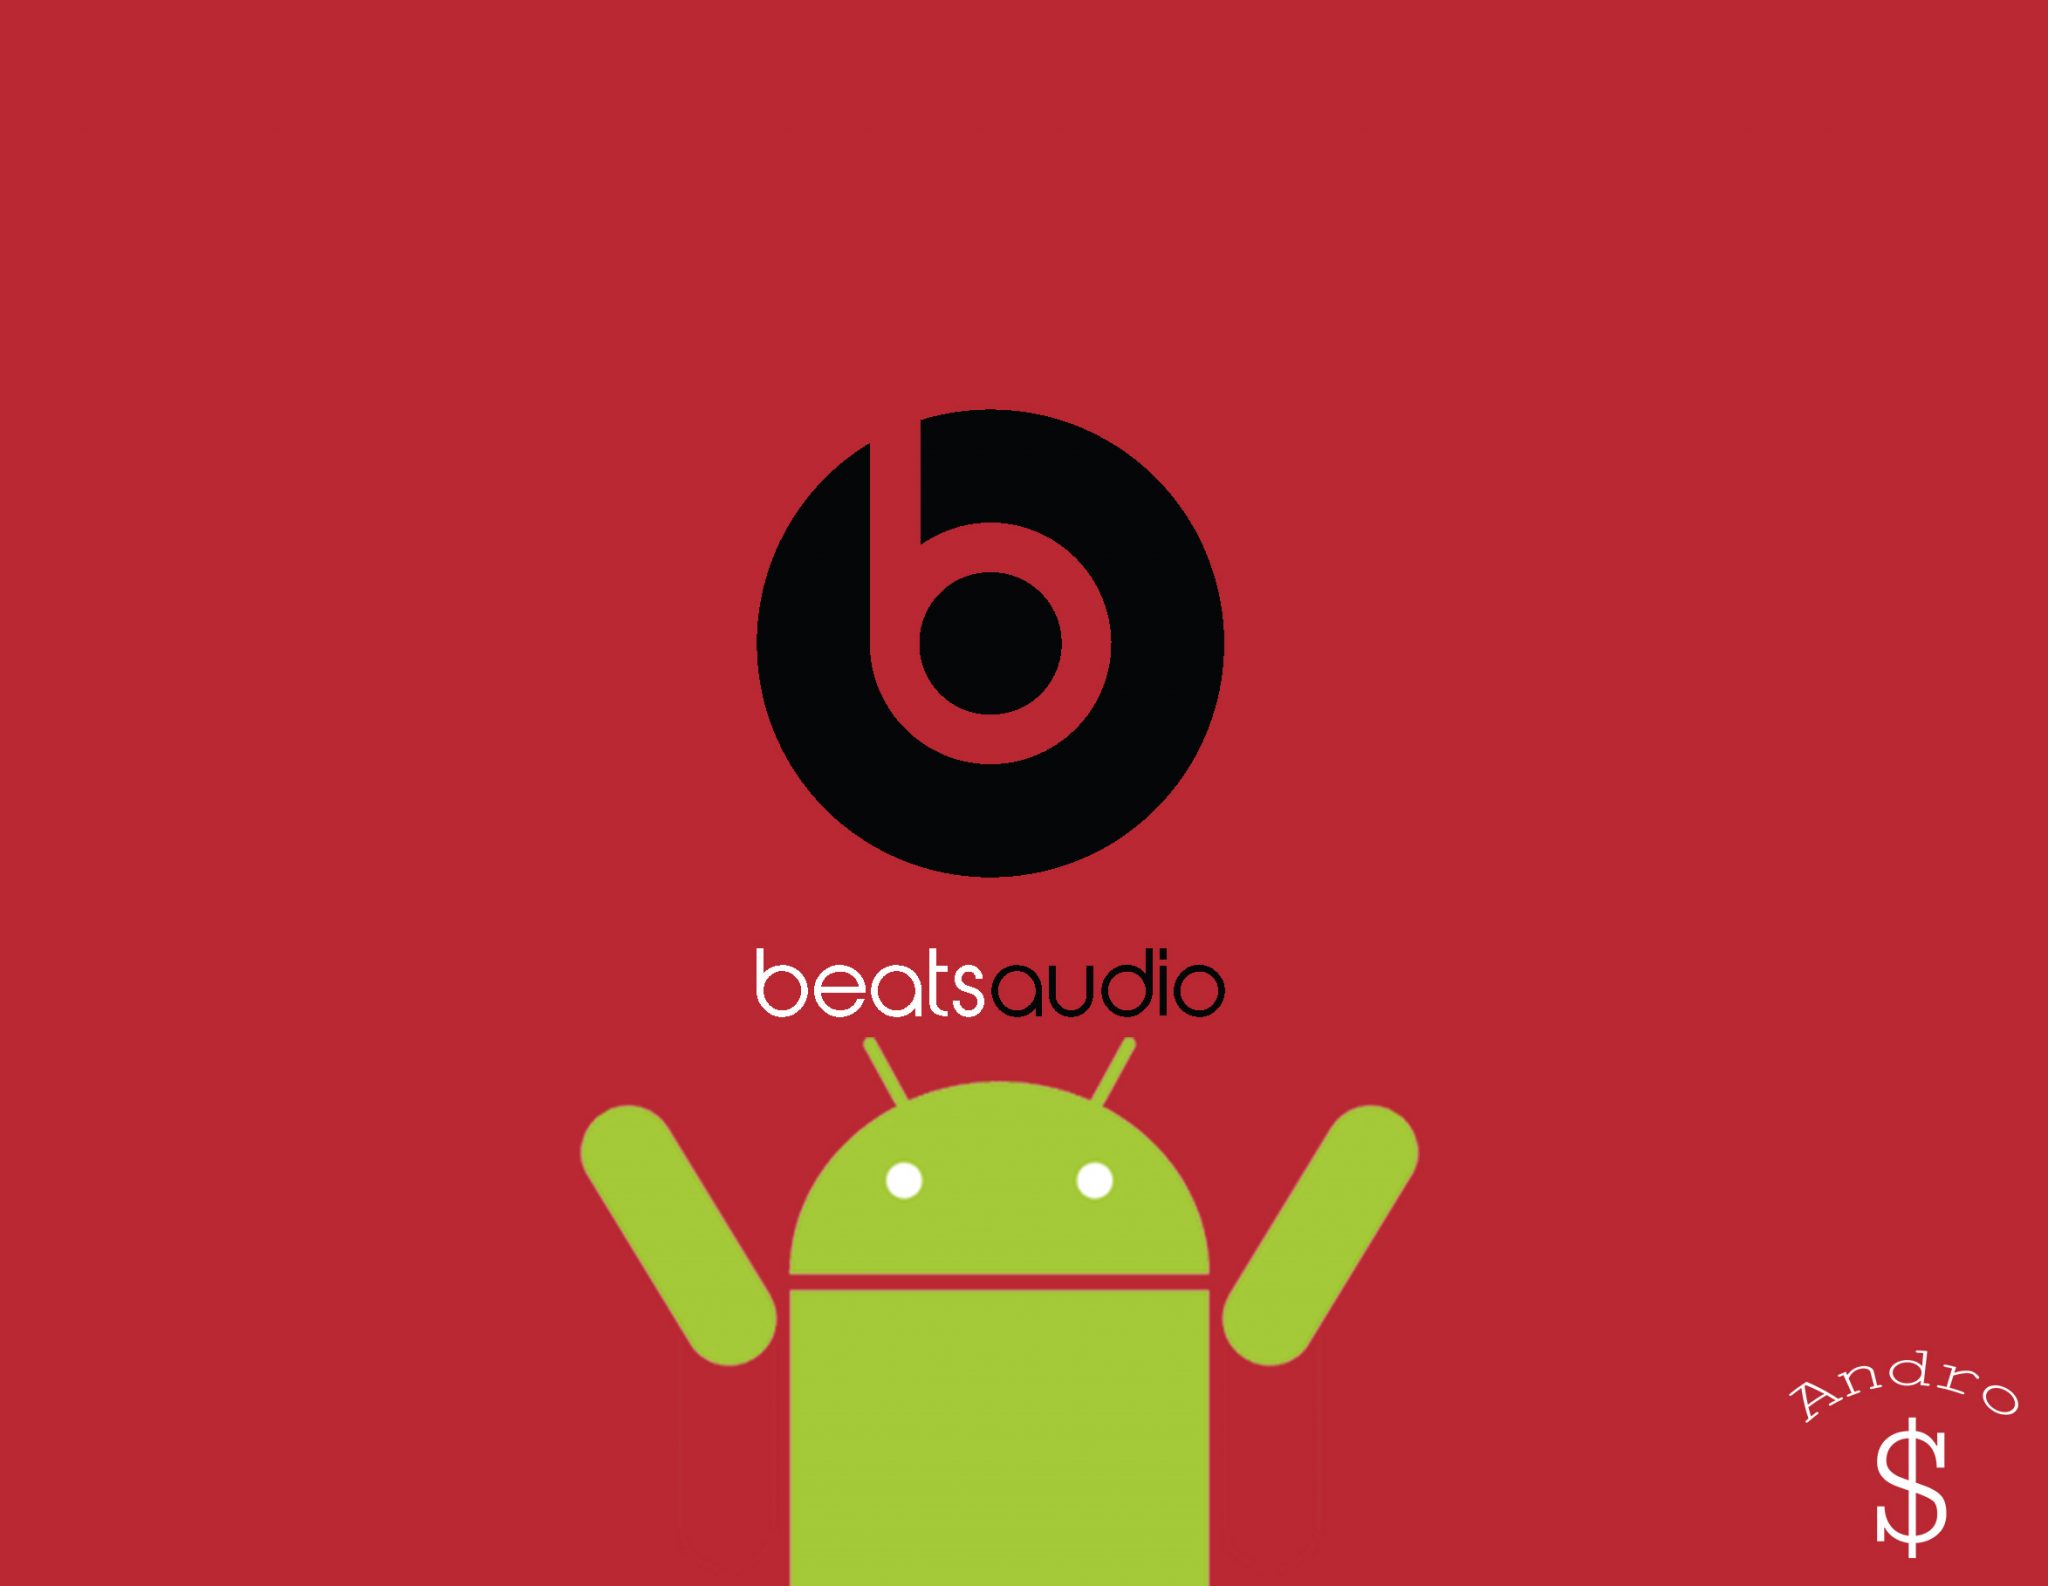 BeatsAudioAndroid_www.androdollar.com